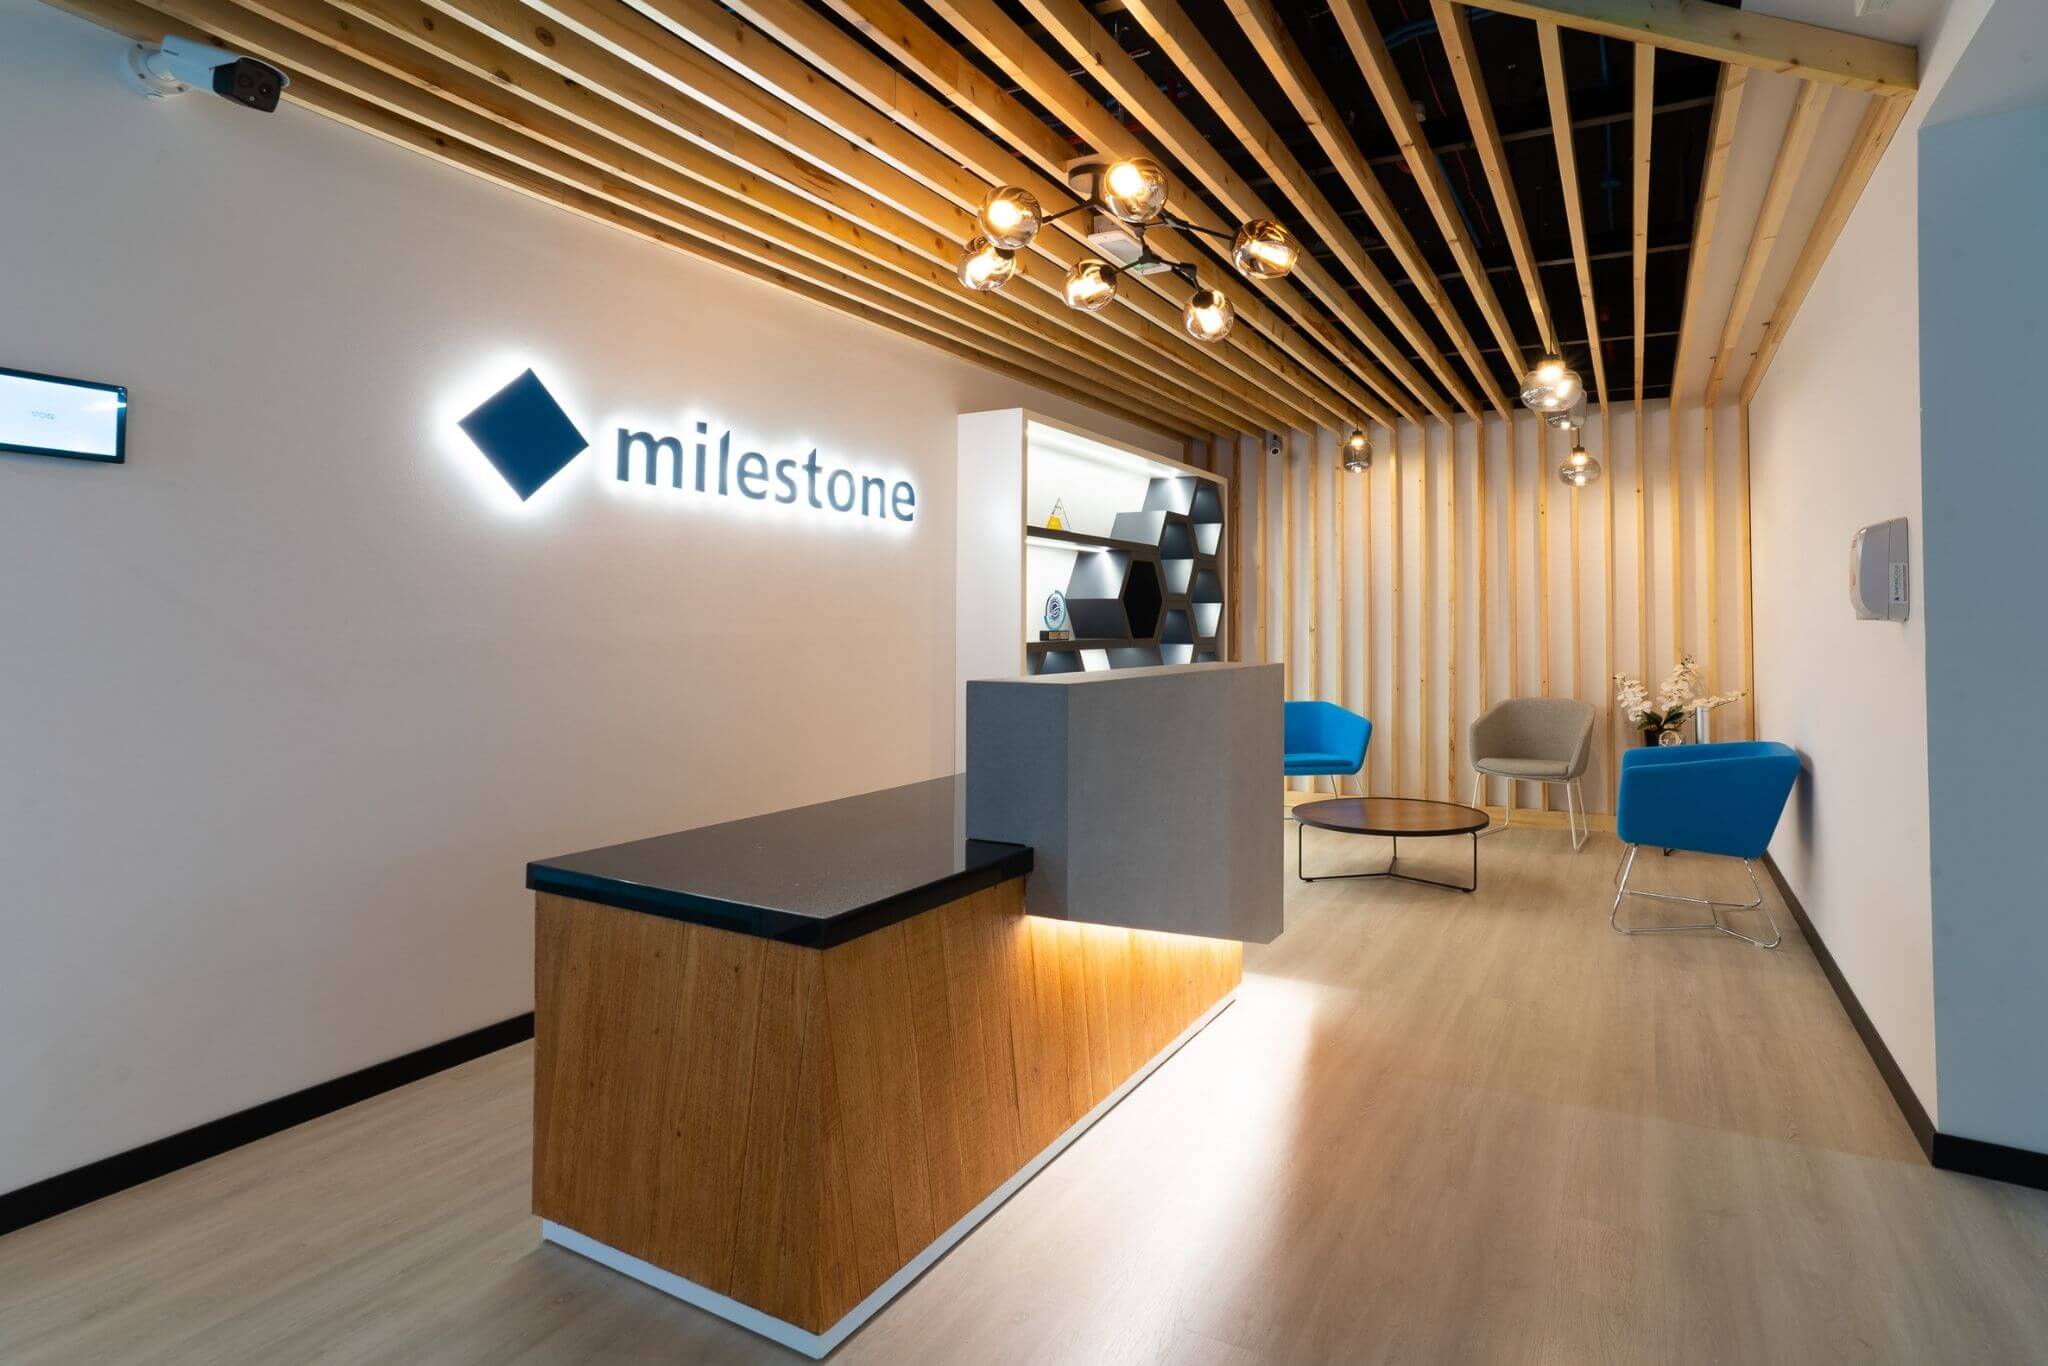 Milestone office in Dubai design and build by Motif Interiors1